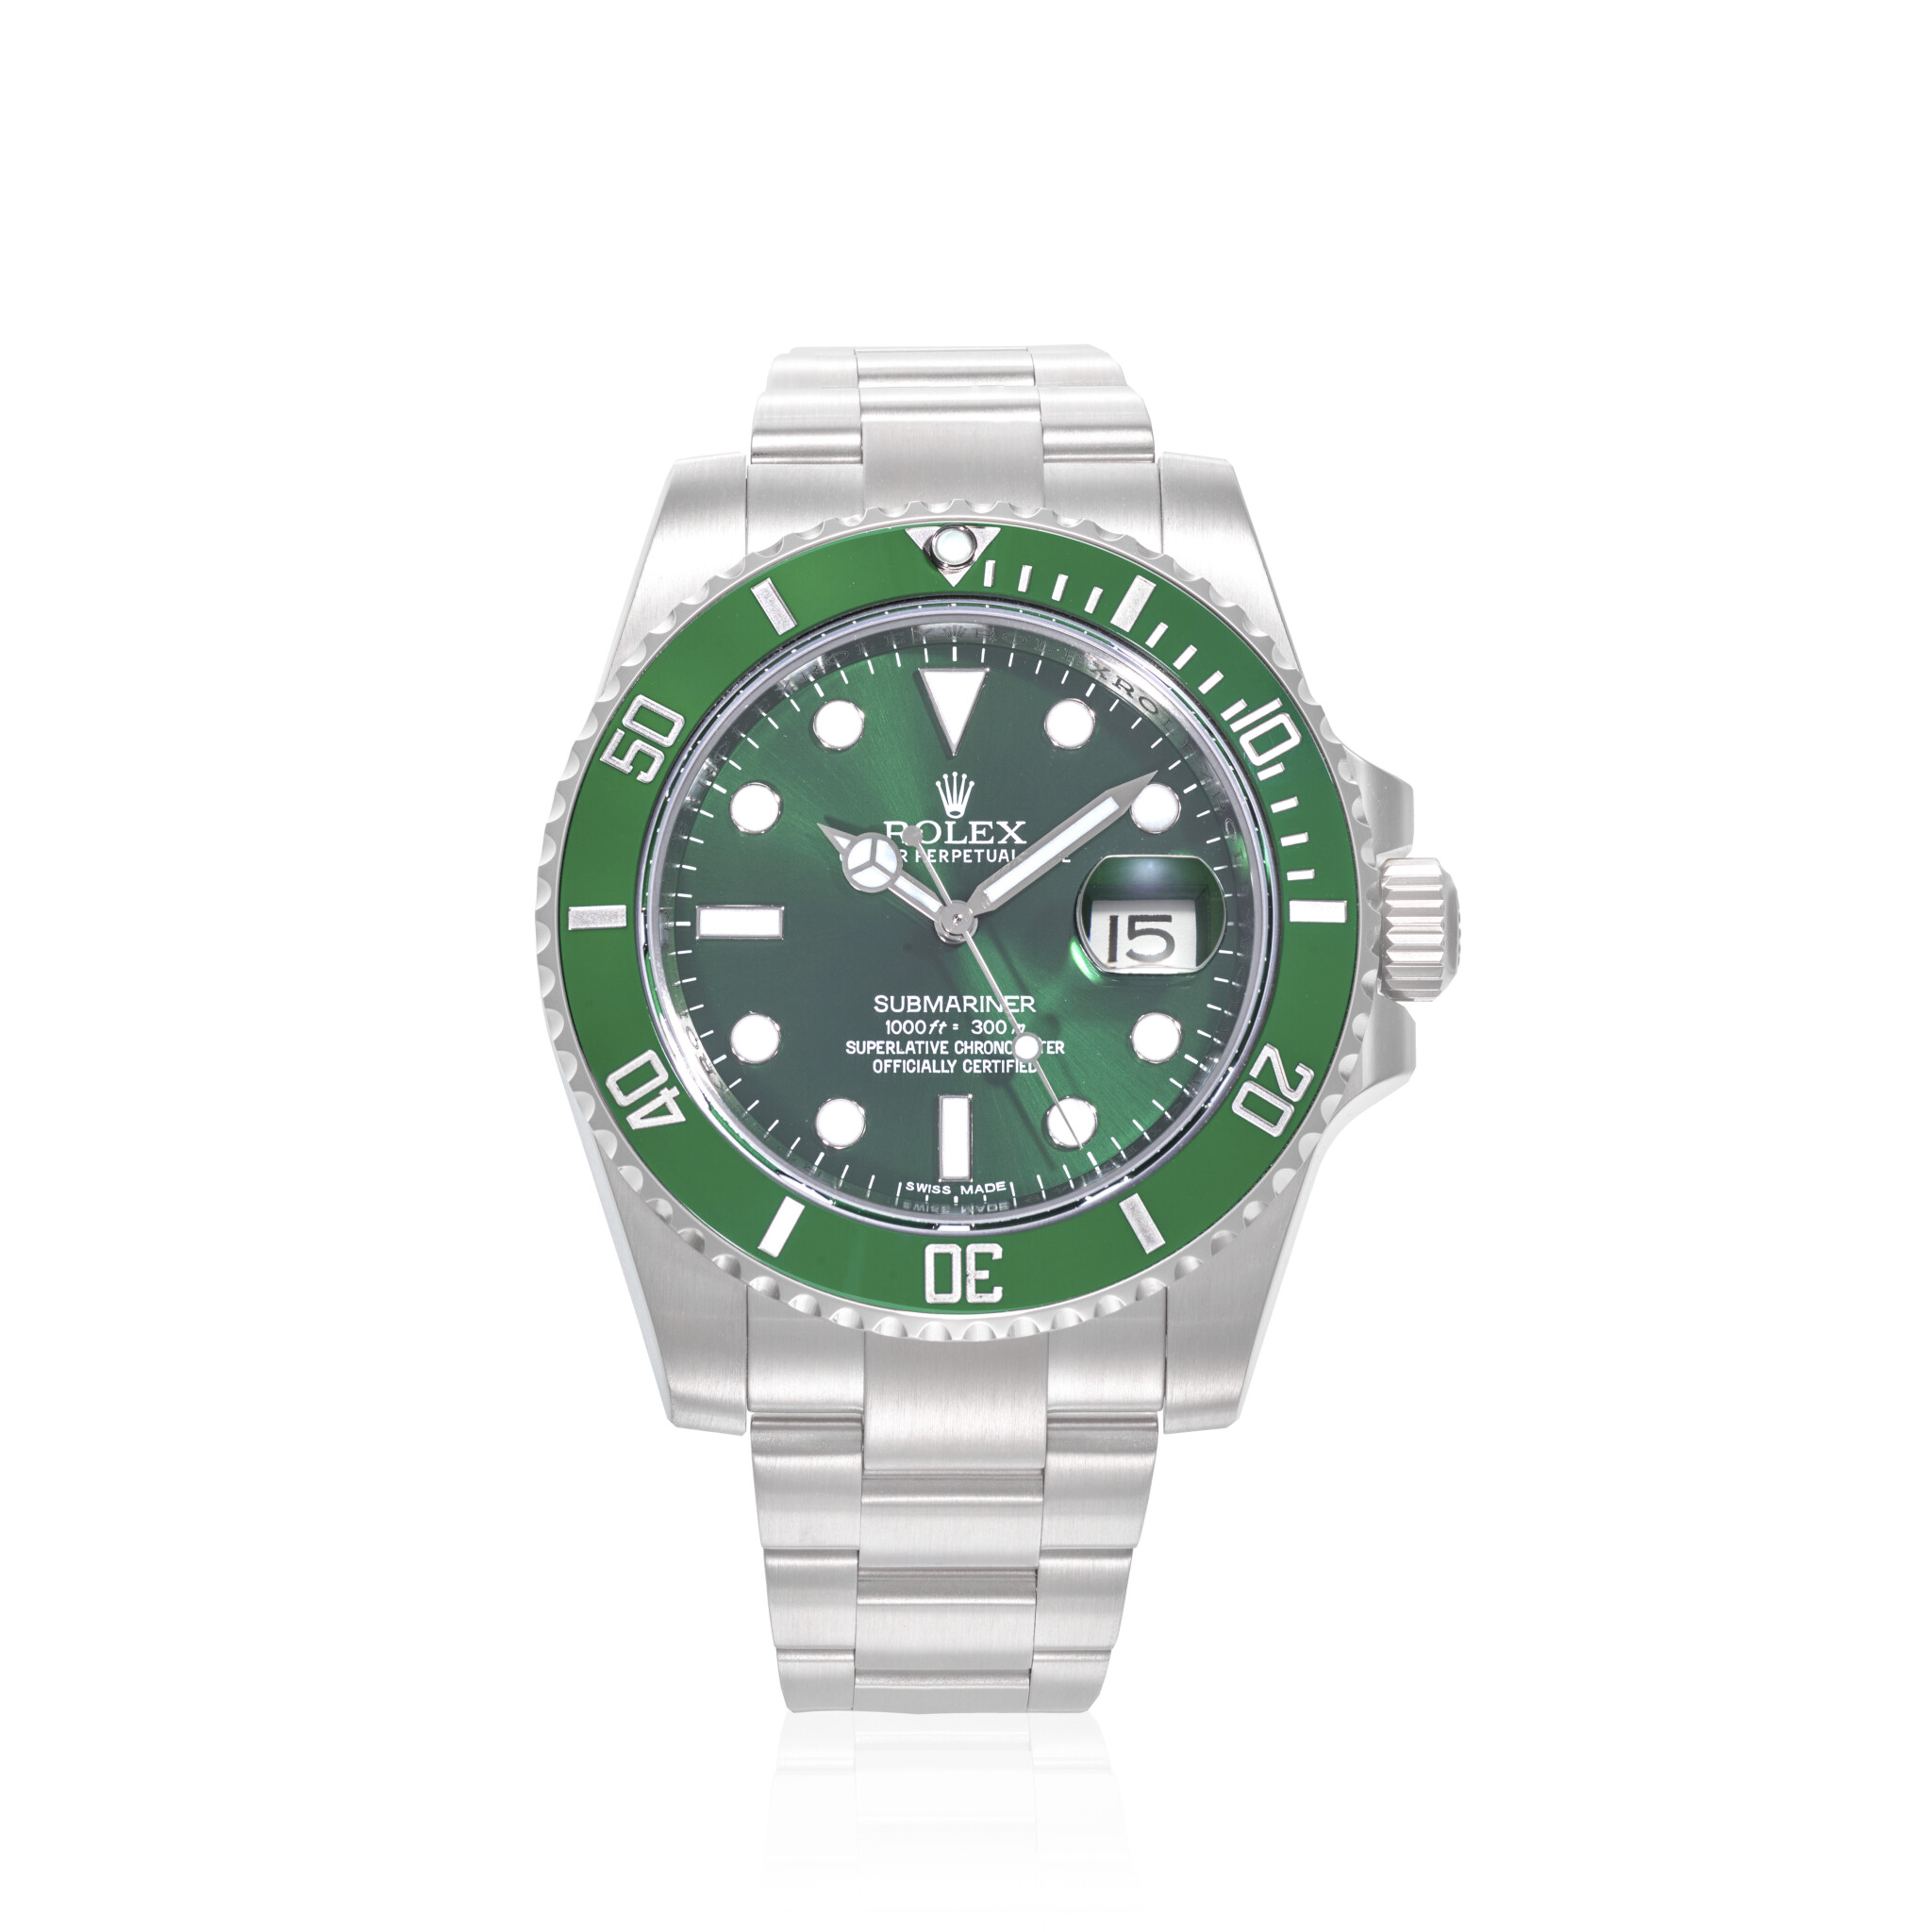 Bonhams is auctioning 11 never-worn Rolex Submariner "Hulk" watches this week on line. 